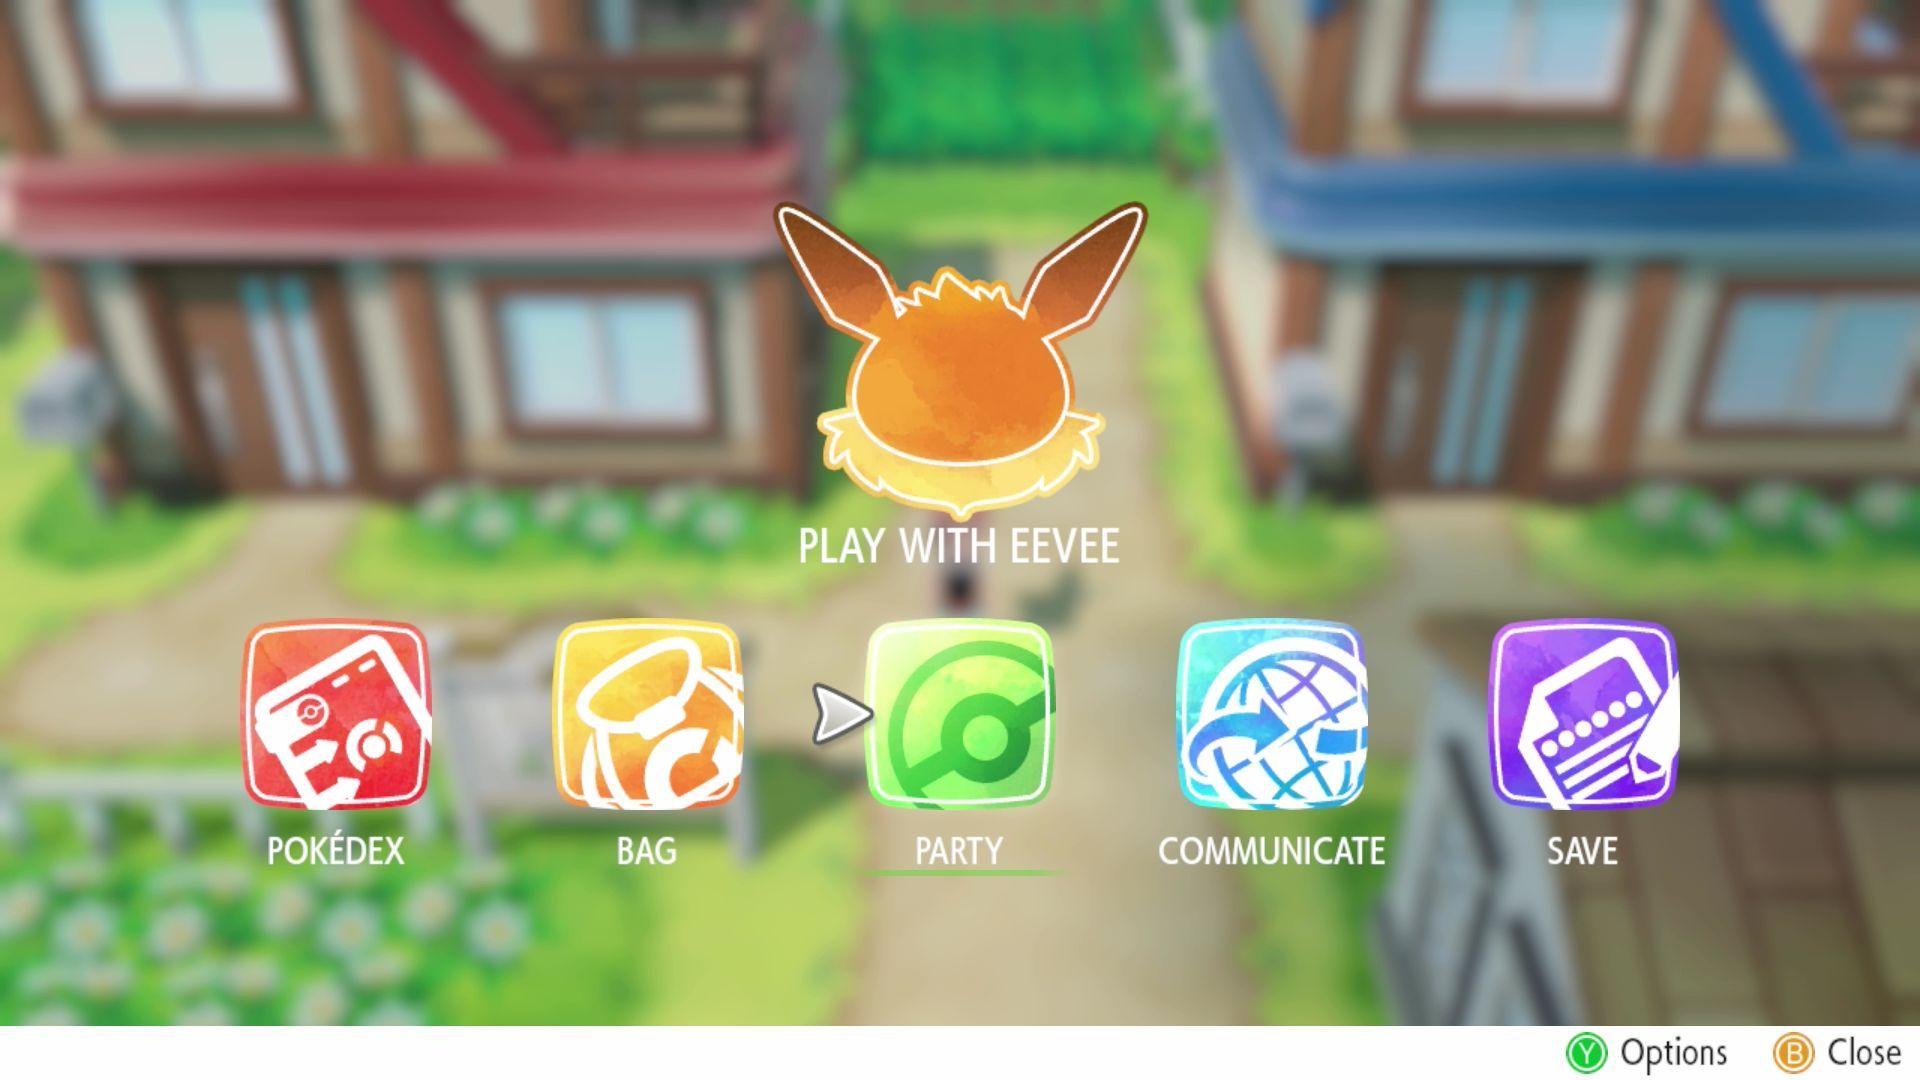 Eevee Games App Logo - Pokémon: Let's Go, Pikachu! and Pokémon: Let's Go, Eevee!. Connect